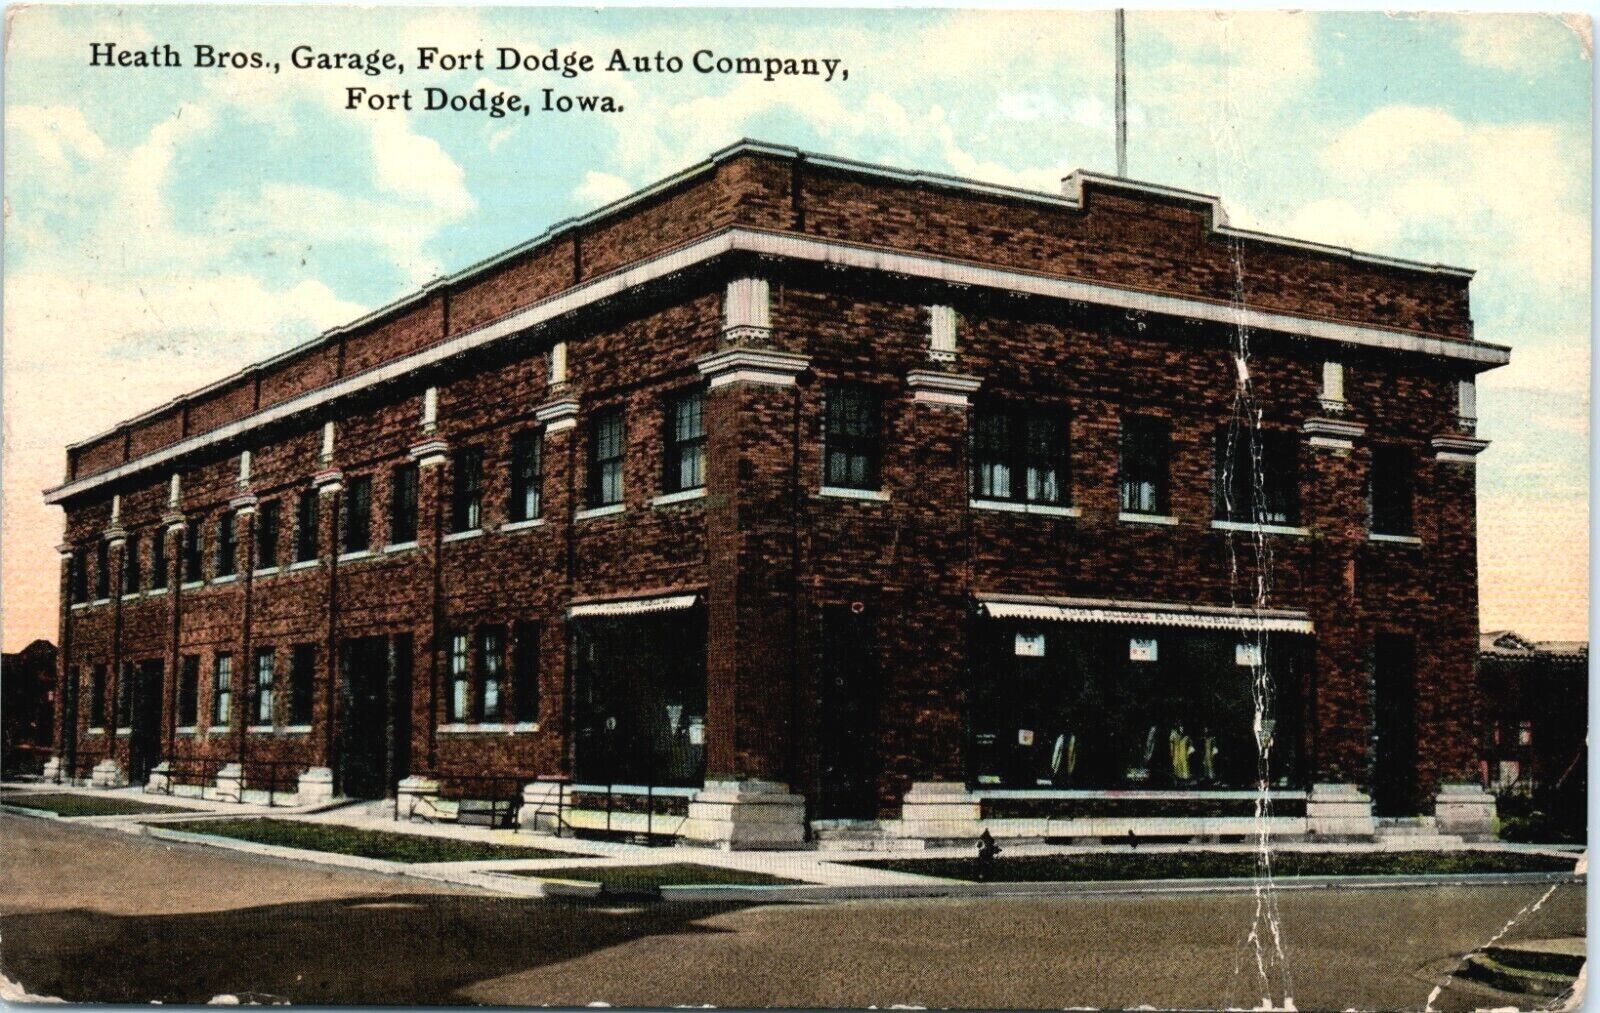 FORT DODGE IOWA 1911 HEATH BROS GARAGE FORT DODGE AUTO COMPANY WEBSTER CO G1